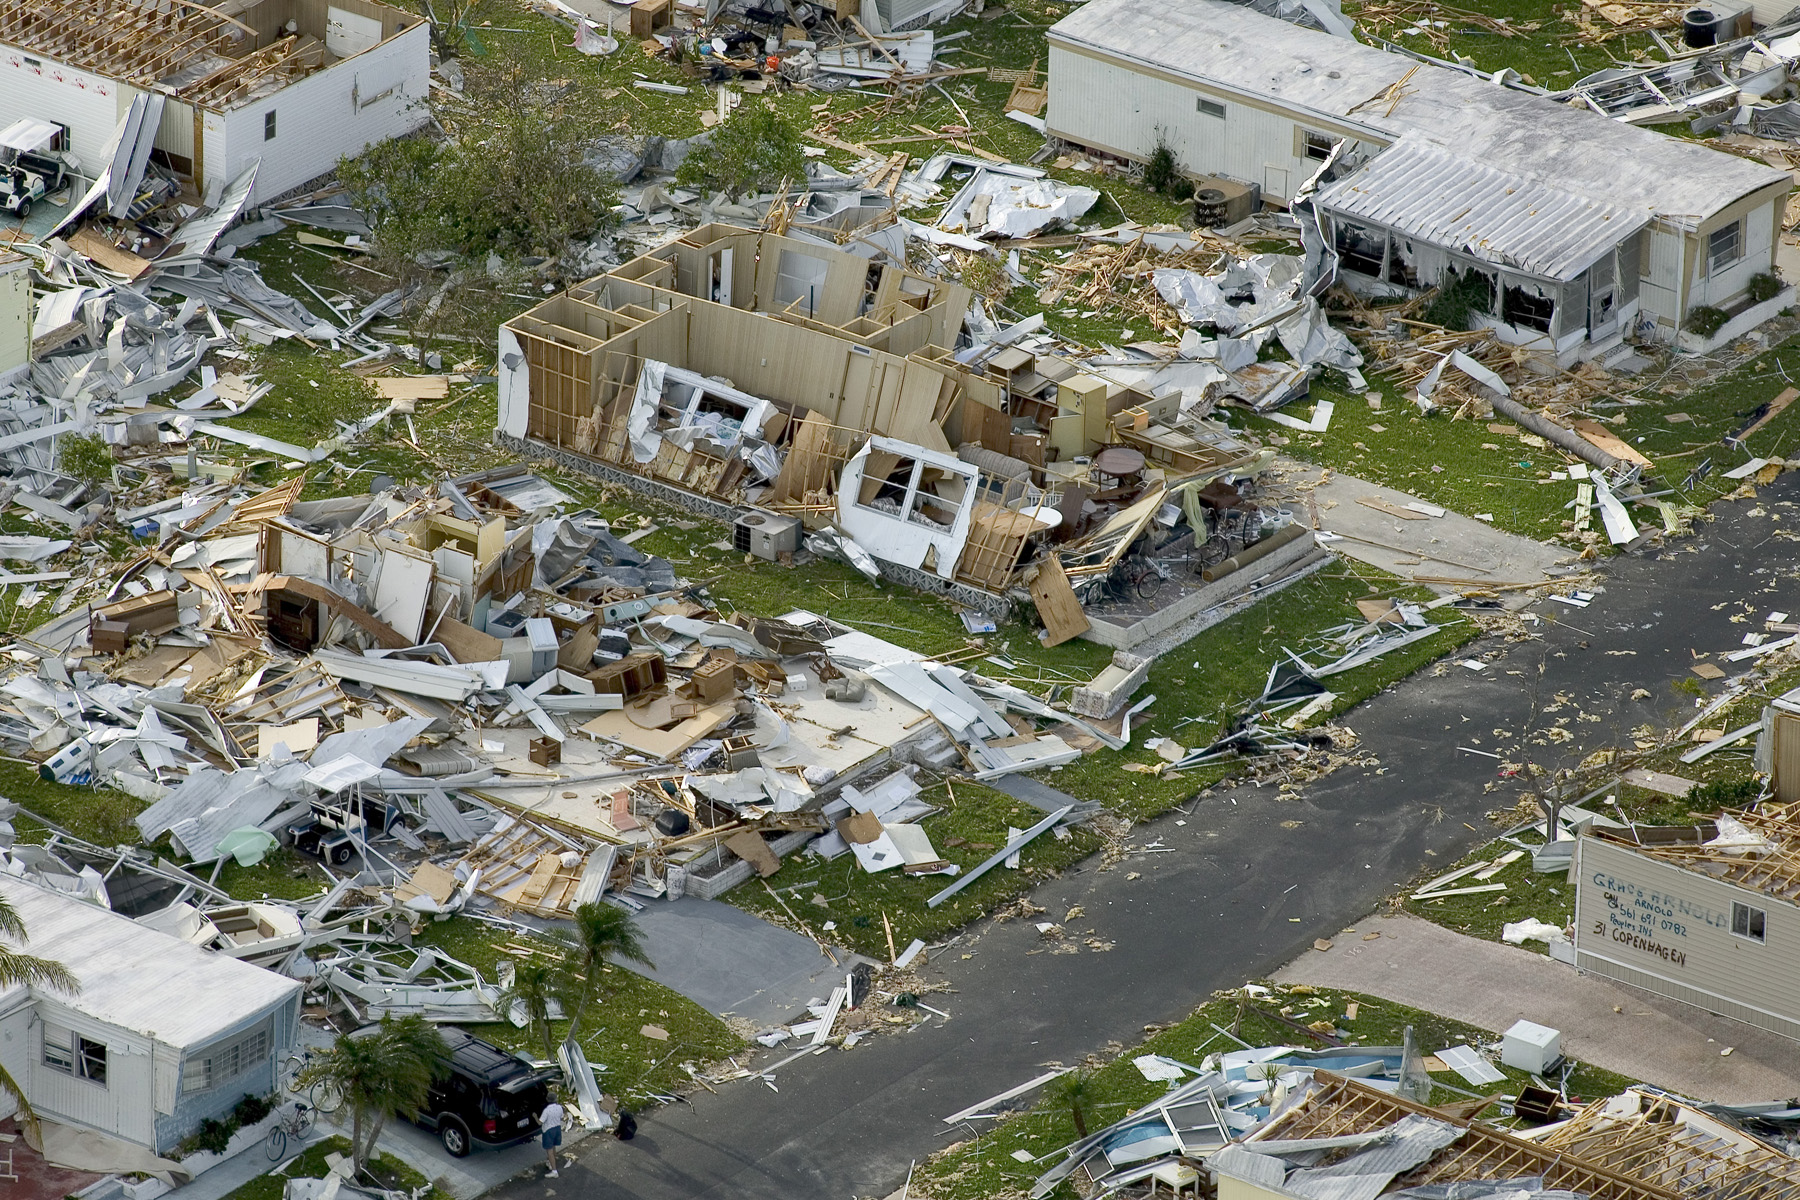 Effects_of_Hurricane_Charley_from_FEMA_Photo_Library_7.jpg